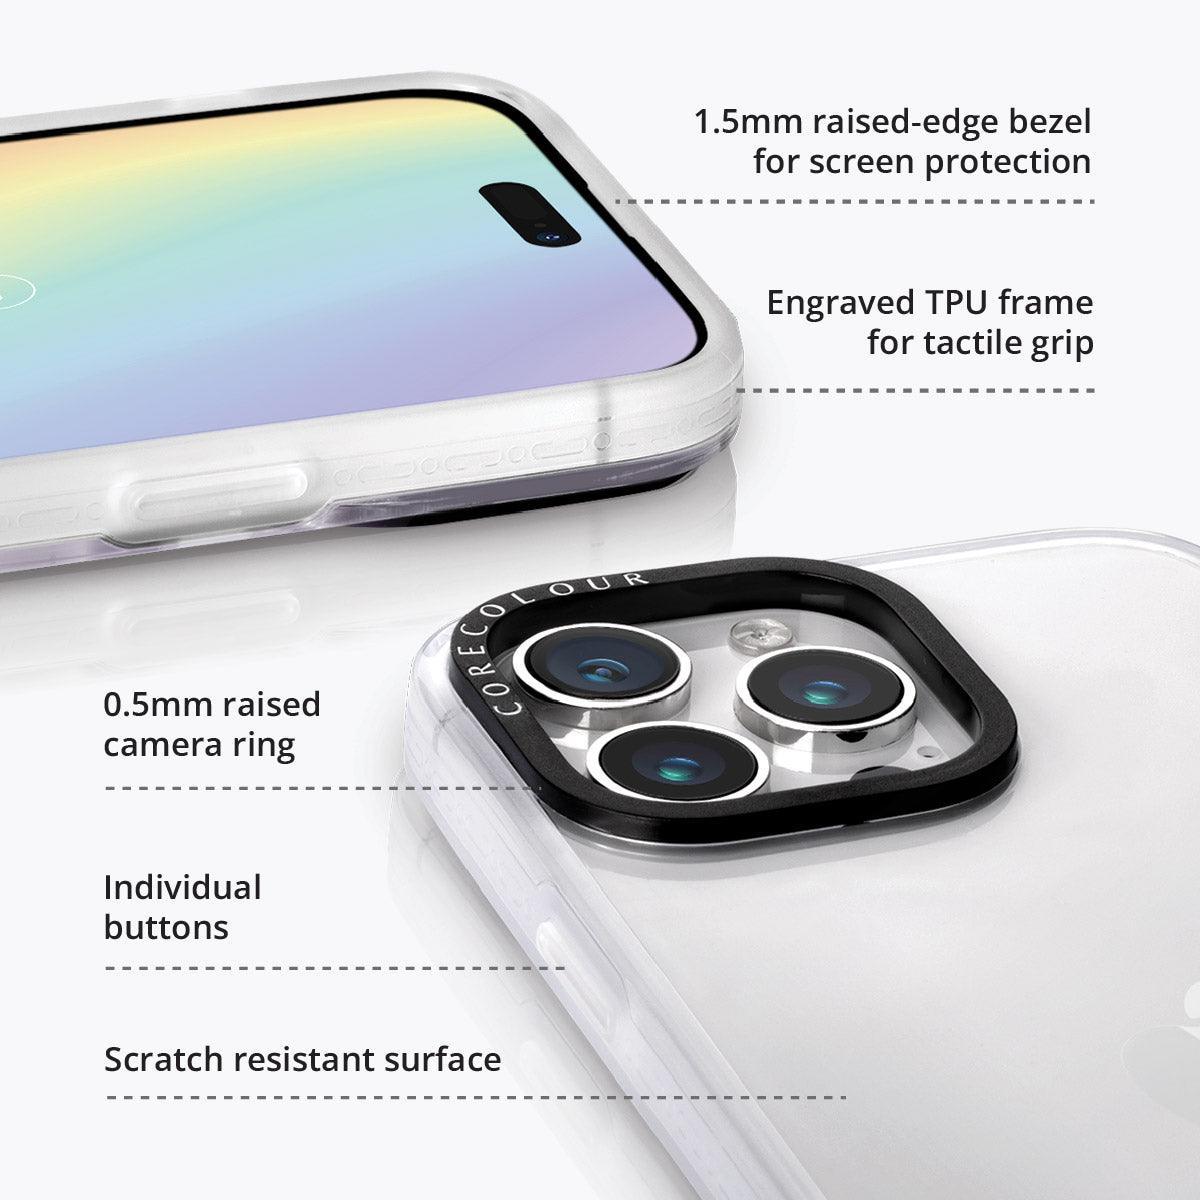 iPhone 14 Pro Max Moving Panda Phone Case MagSafe Compatible - CORECOLOUR AU